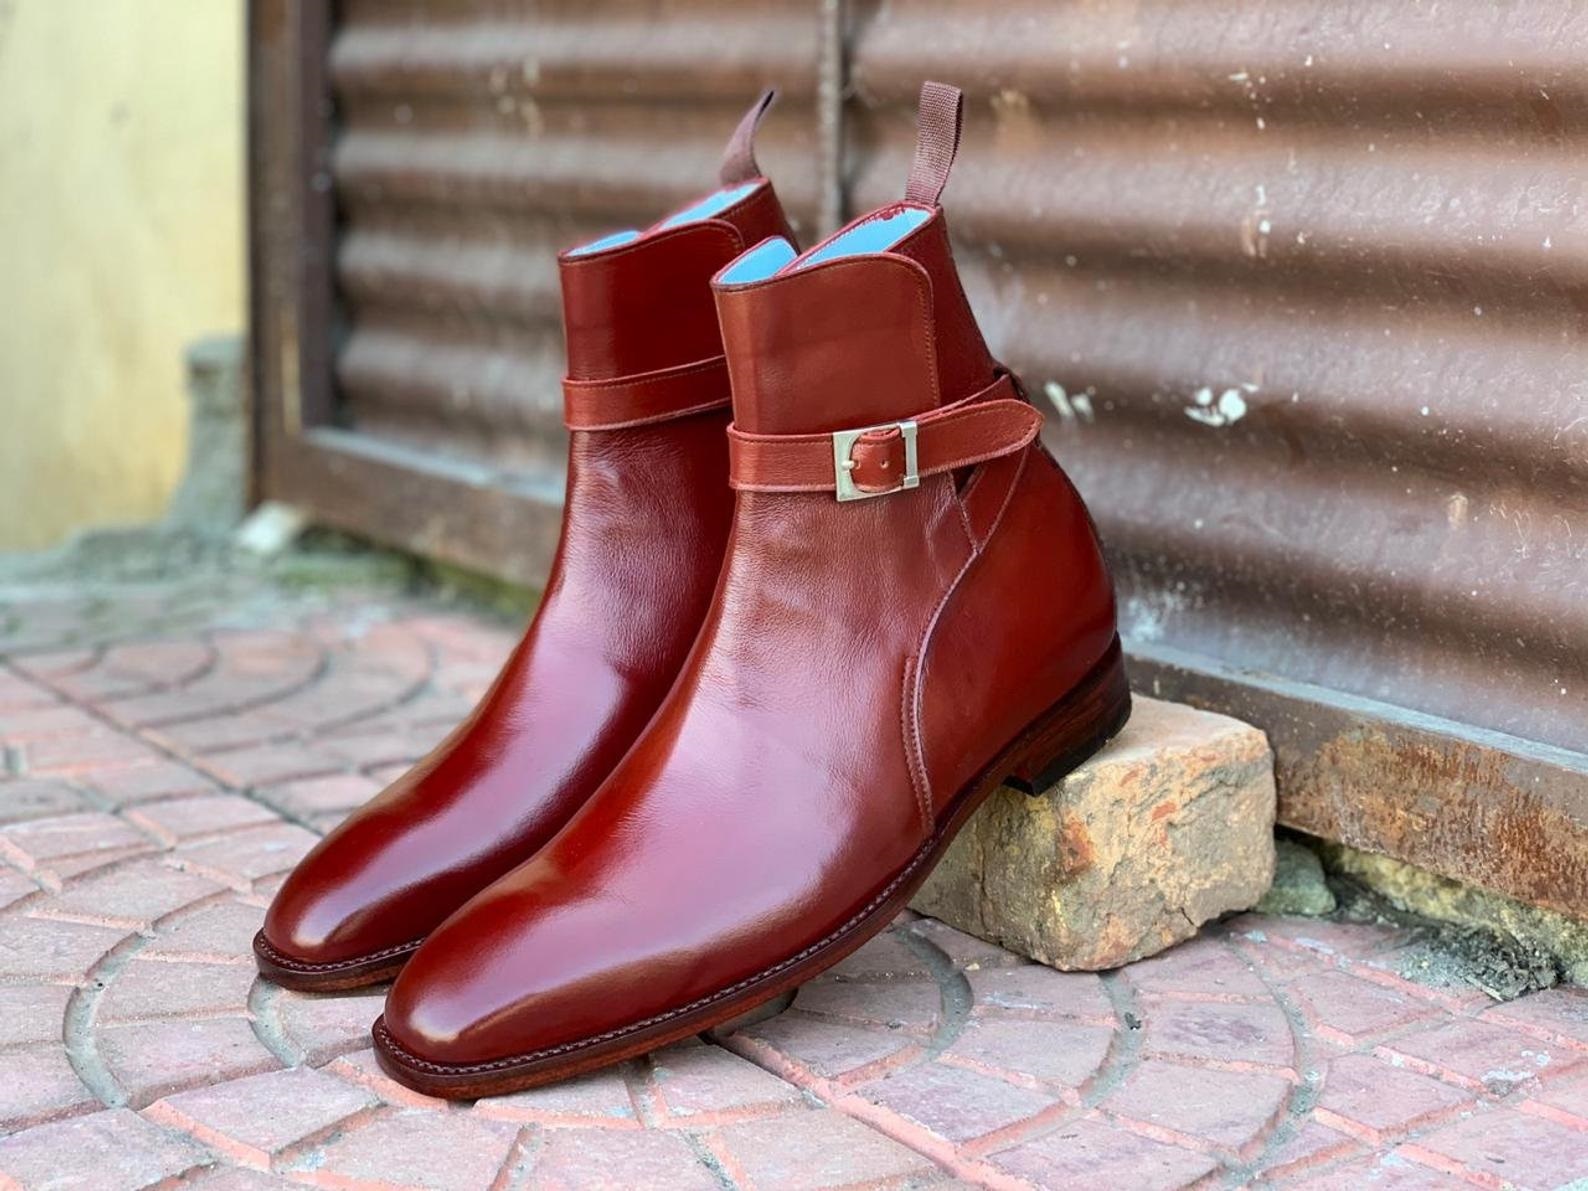 Men Handmade Brown Jodhpur Boots, Men Brown Ankle Boots, Boots for Men